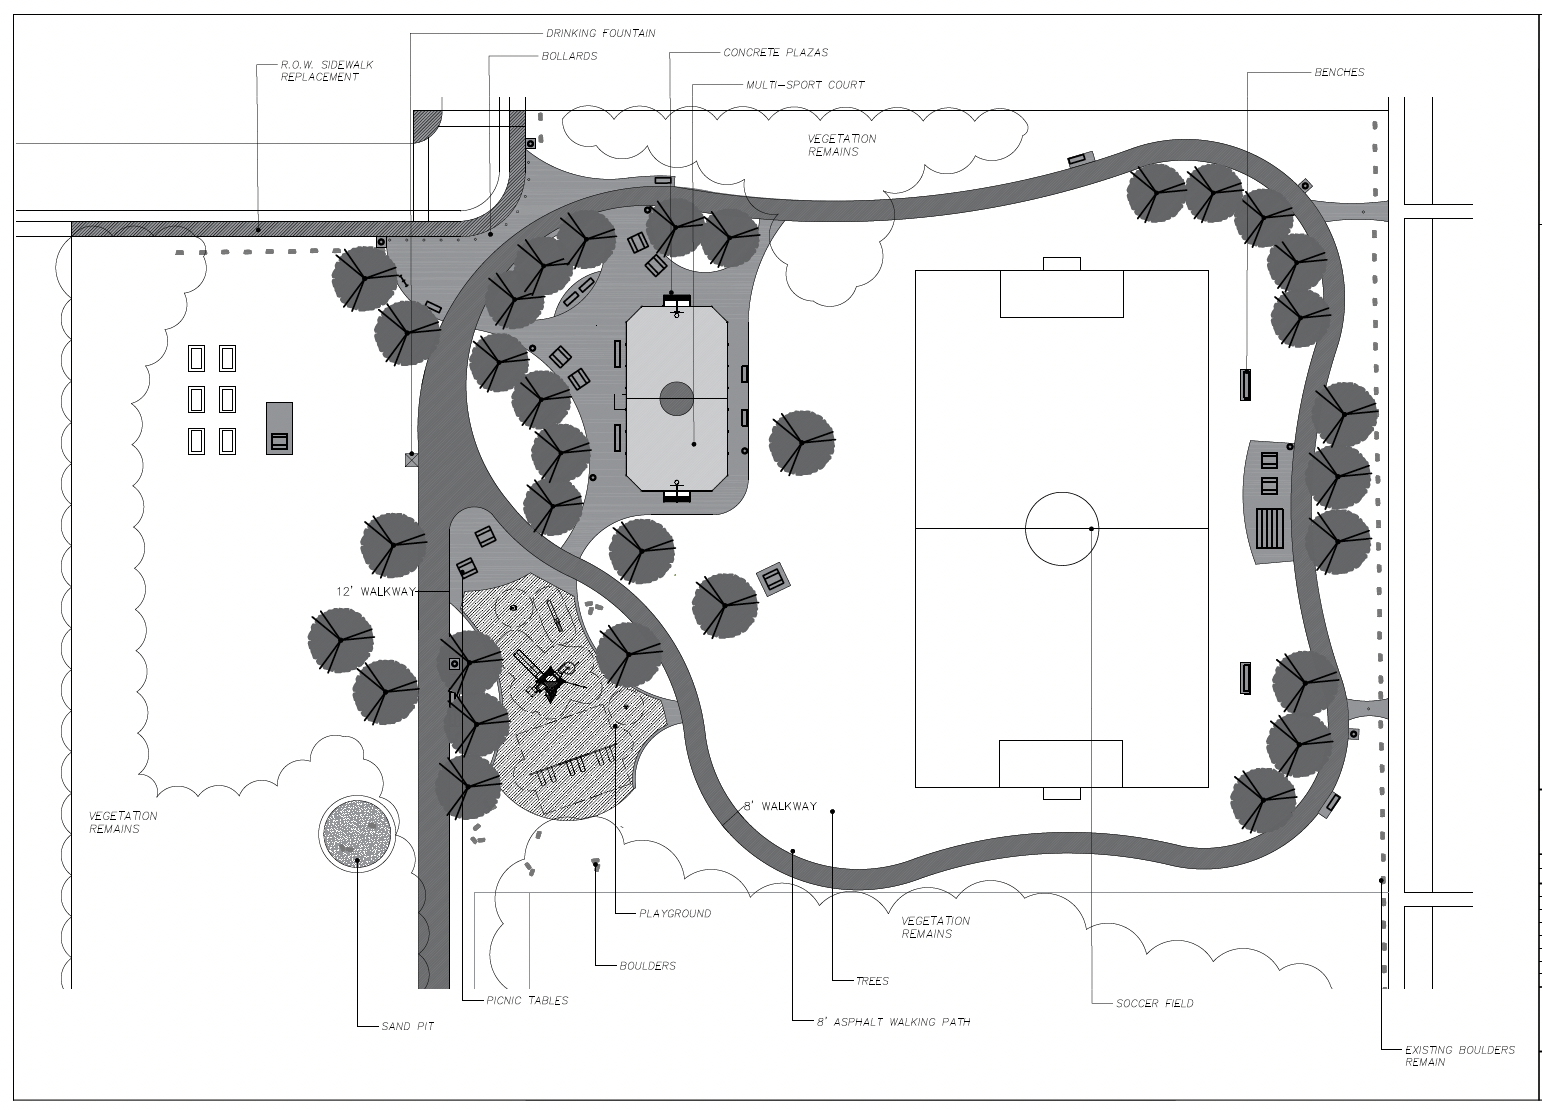 Bieniek site plan, includes walking loop, playground, multi-sport court and soccer field